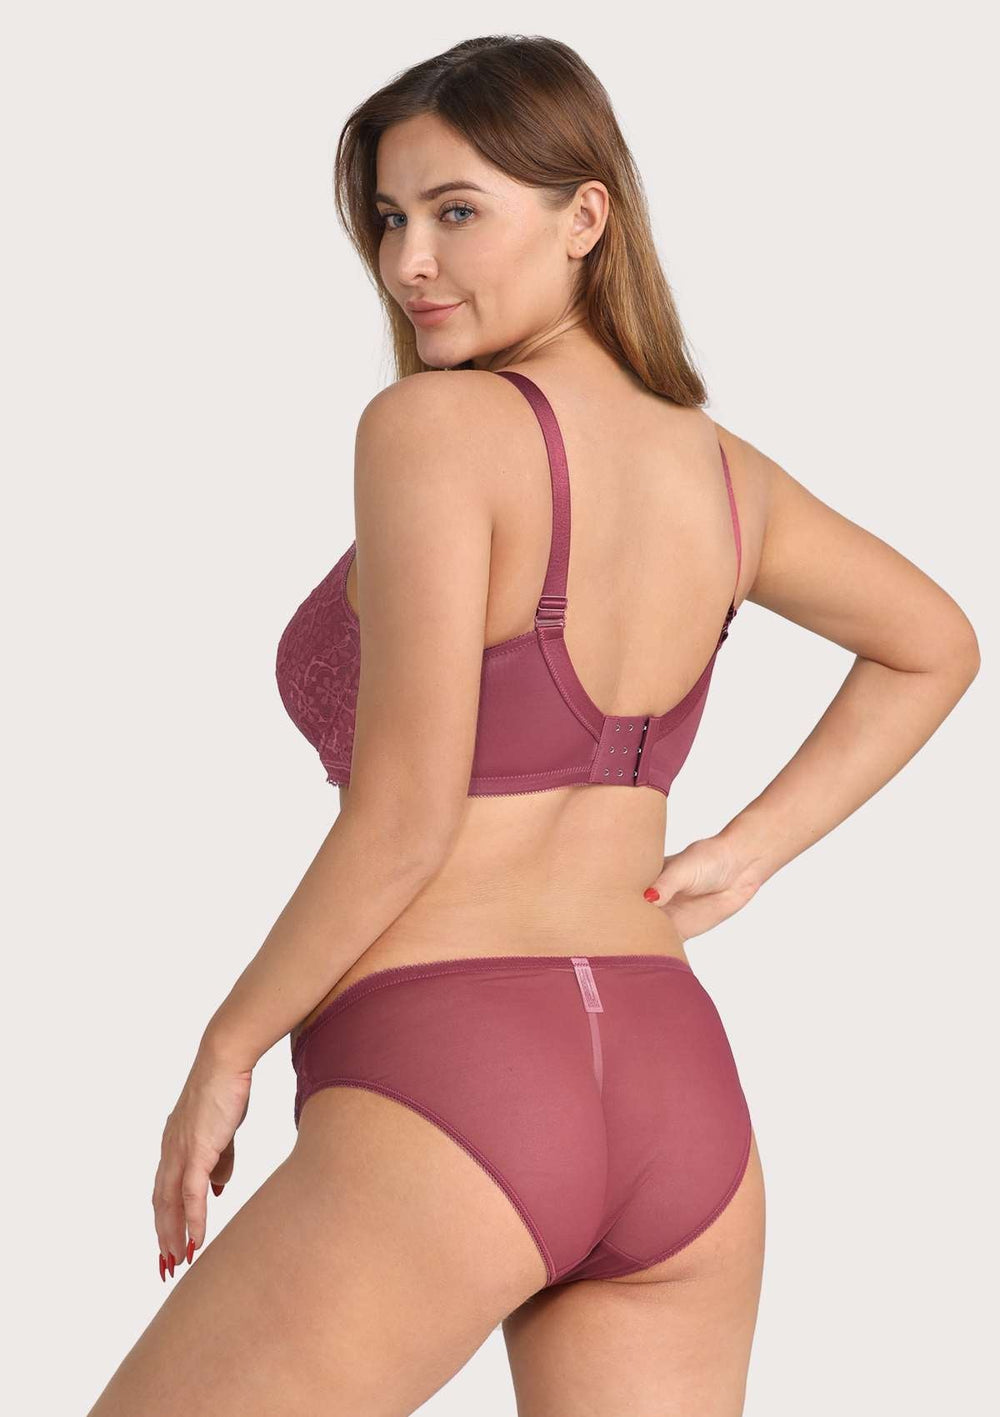 HSIA Anemone Sexy Lace Bra Panty Set: Thick Strap Bra